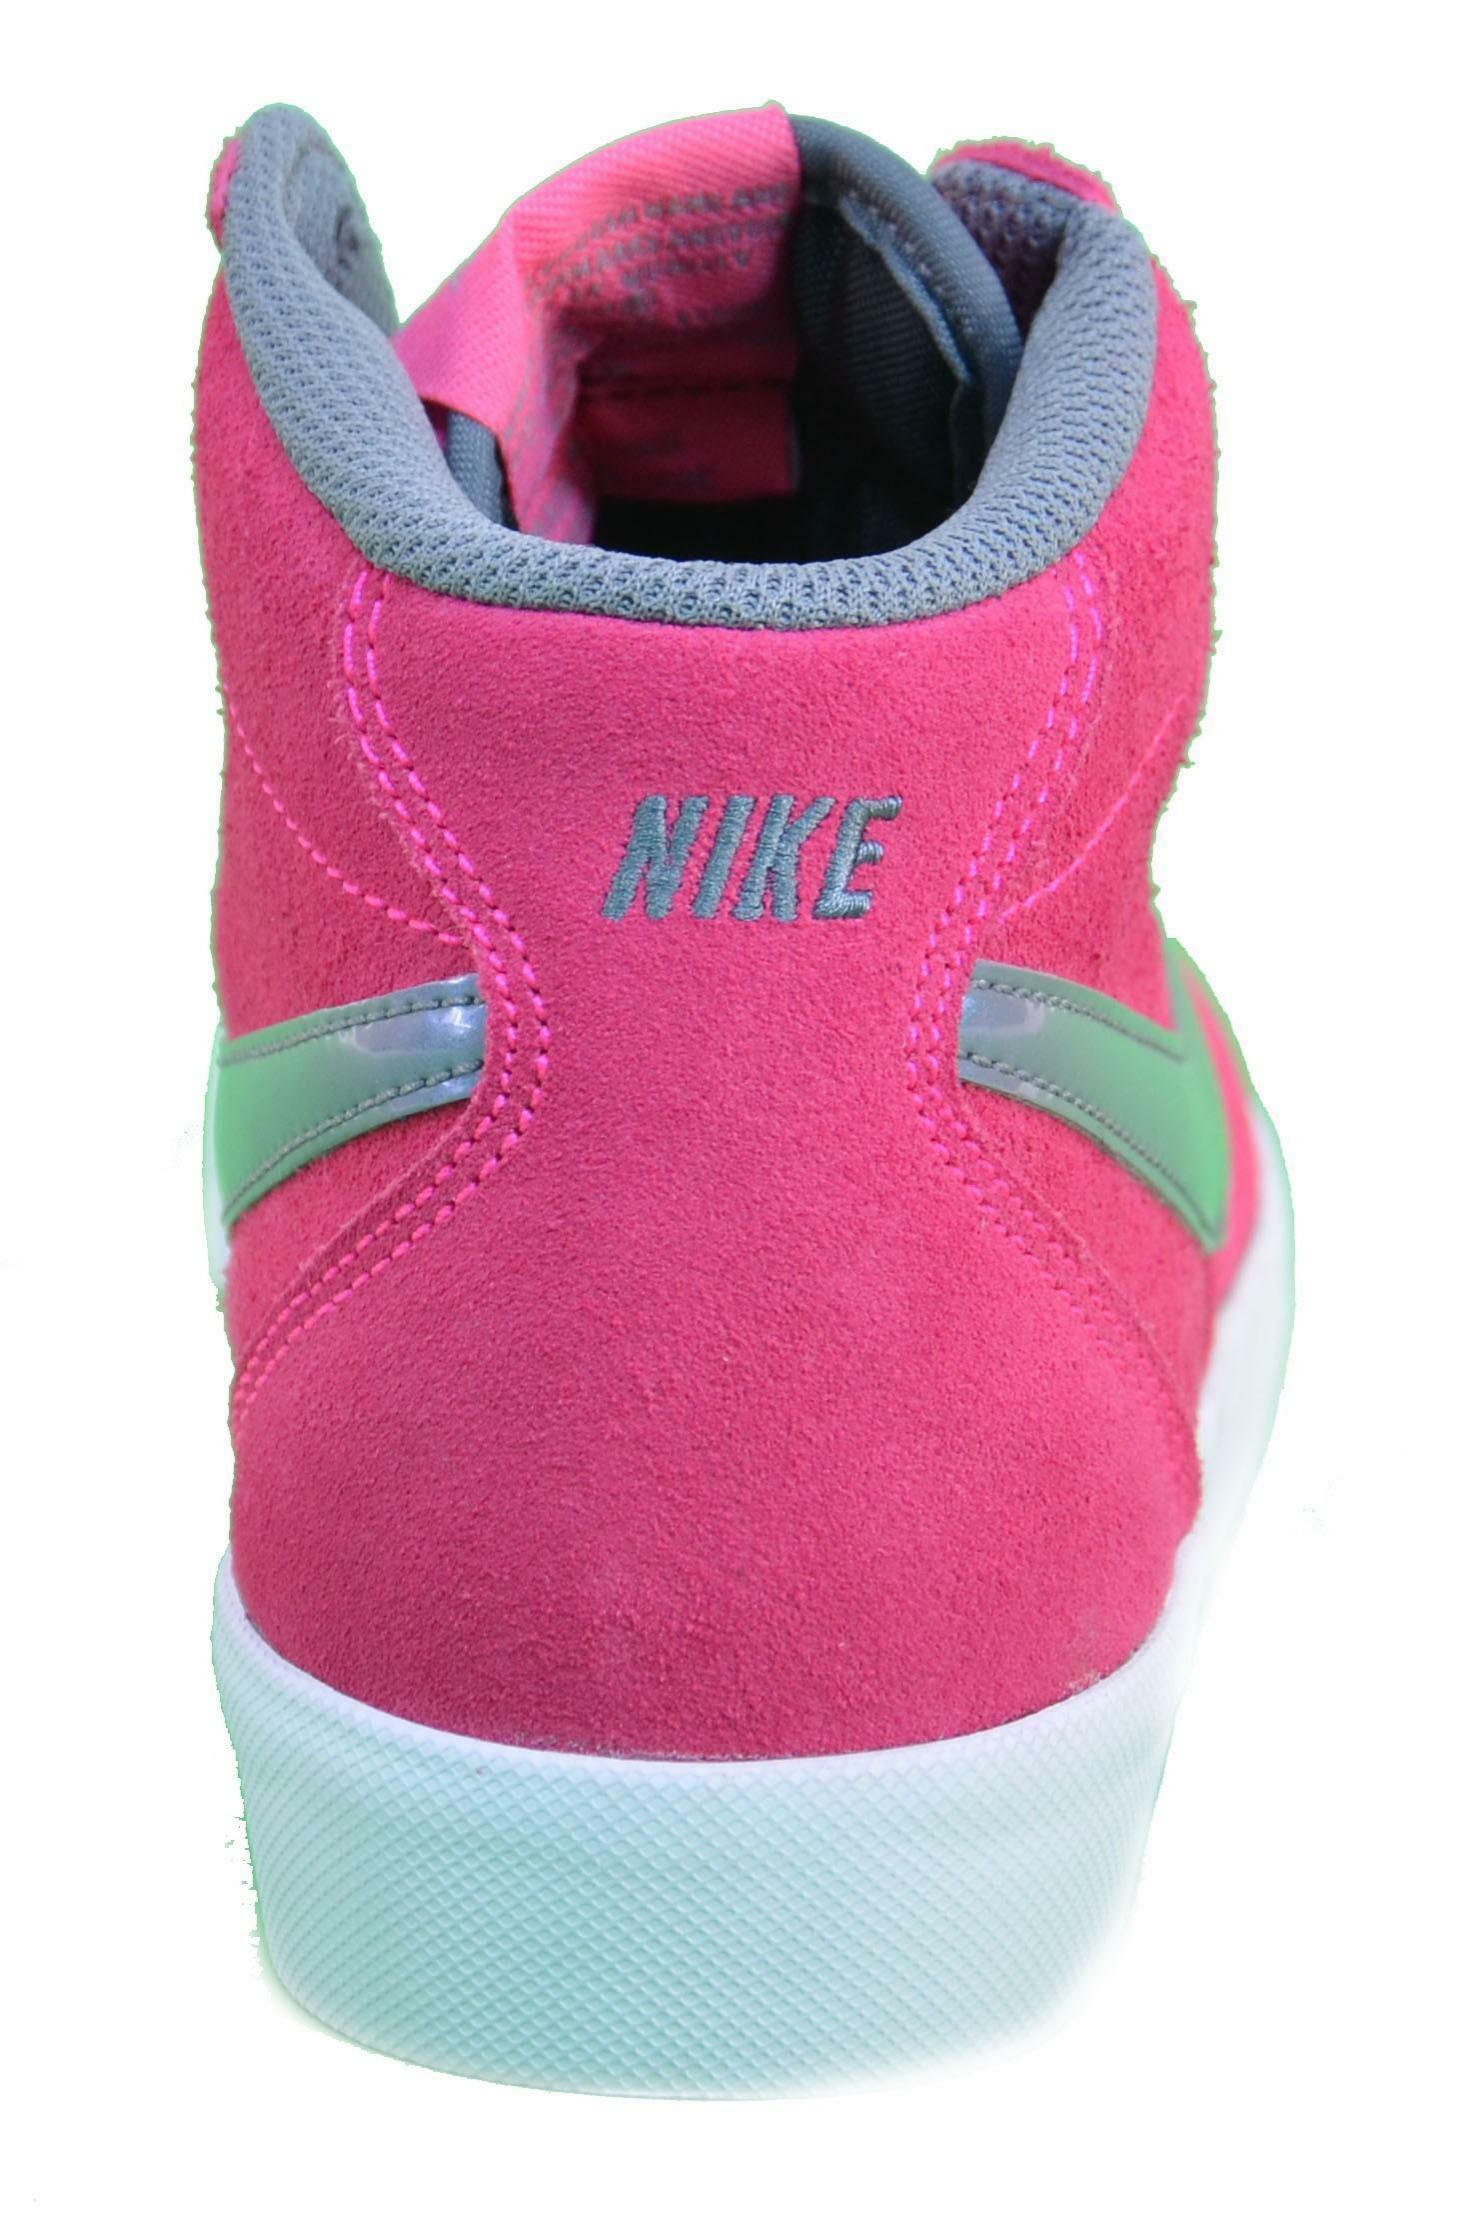 nike nike bruin mid (gs) scarpe donna rosa pelle 577864